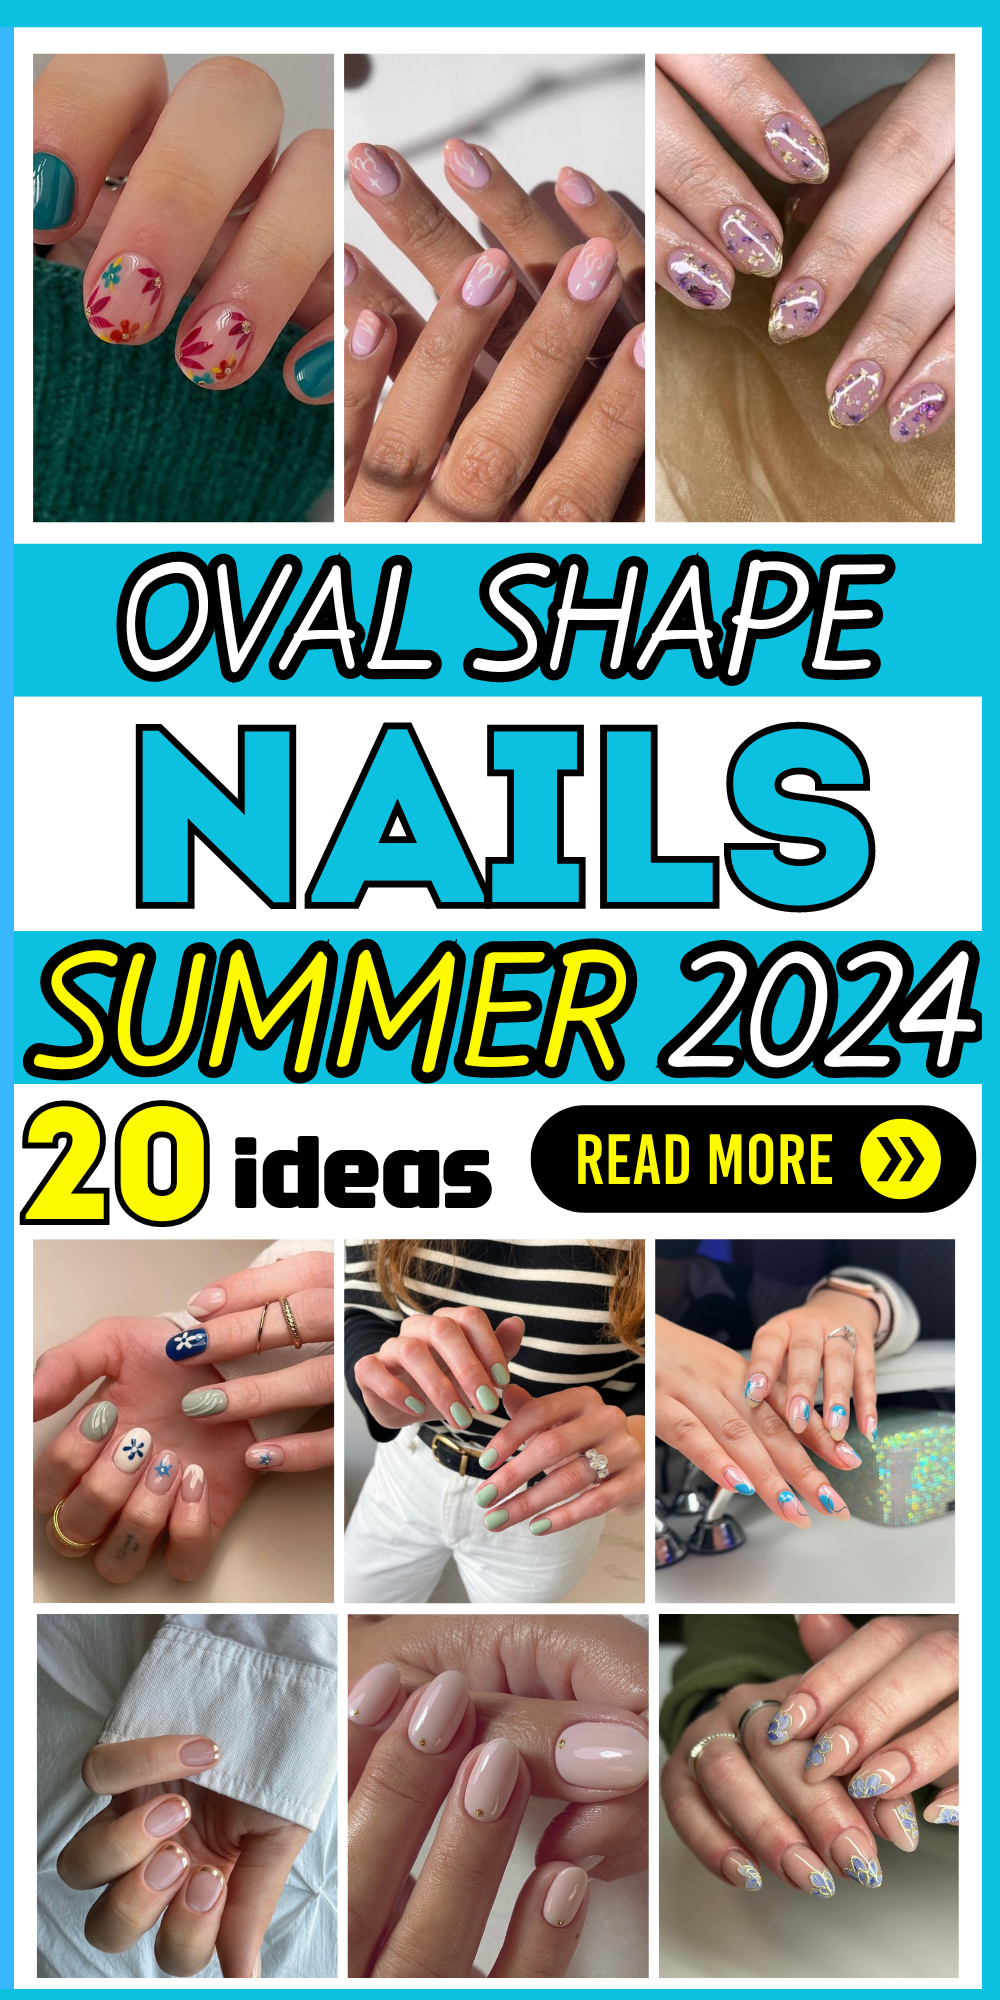 20 Stunning Summer Nails: Short Oval Shapes & Chic Designs